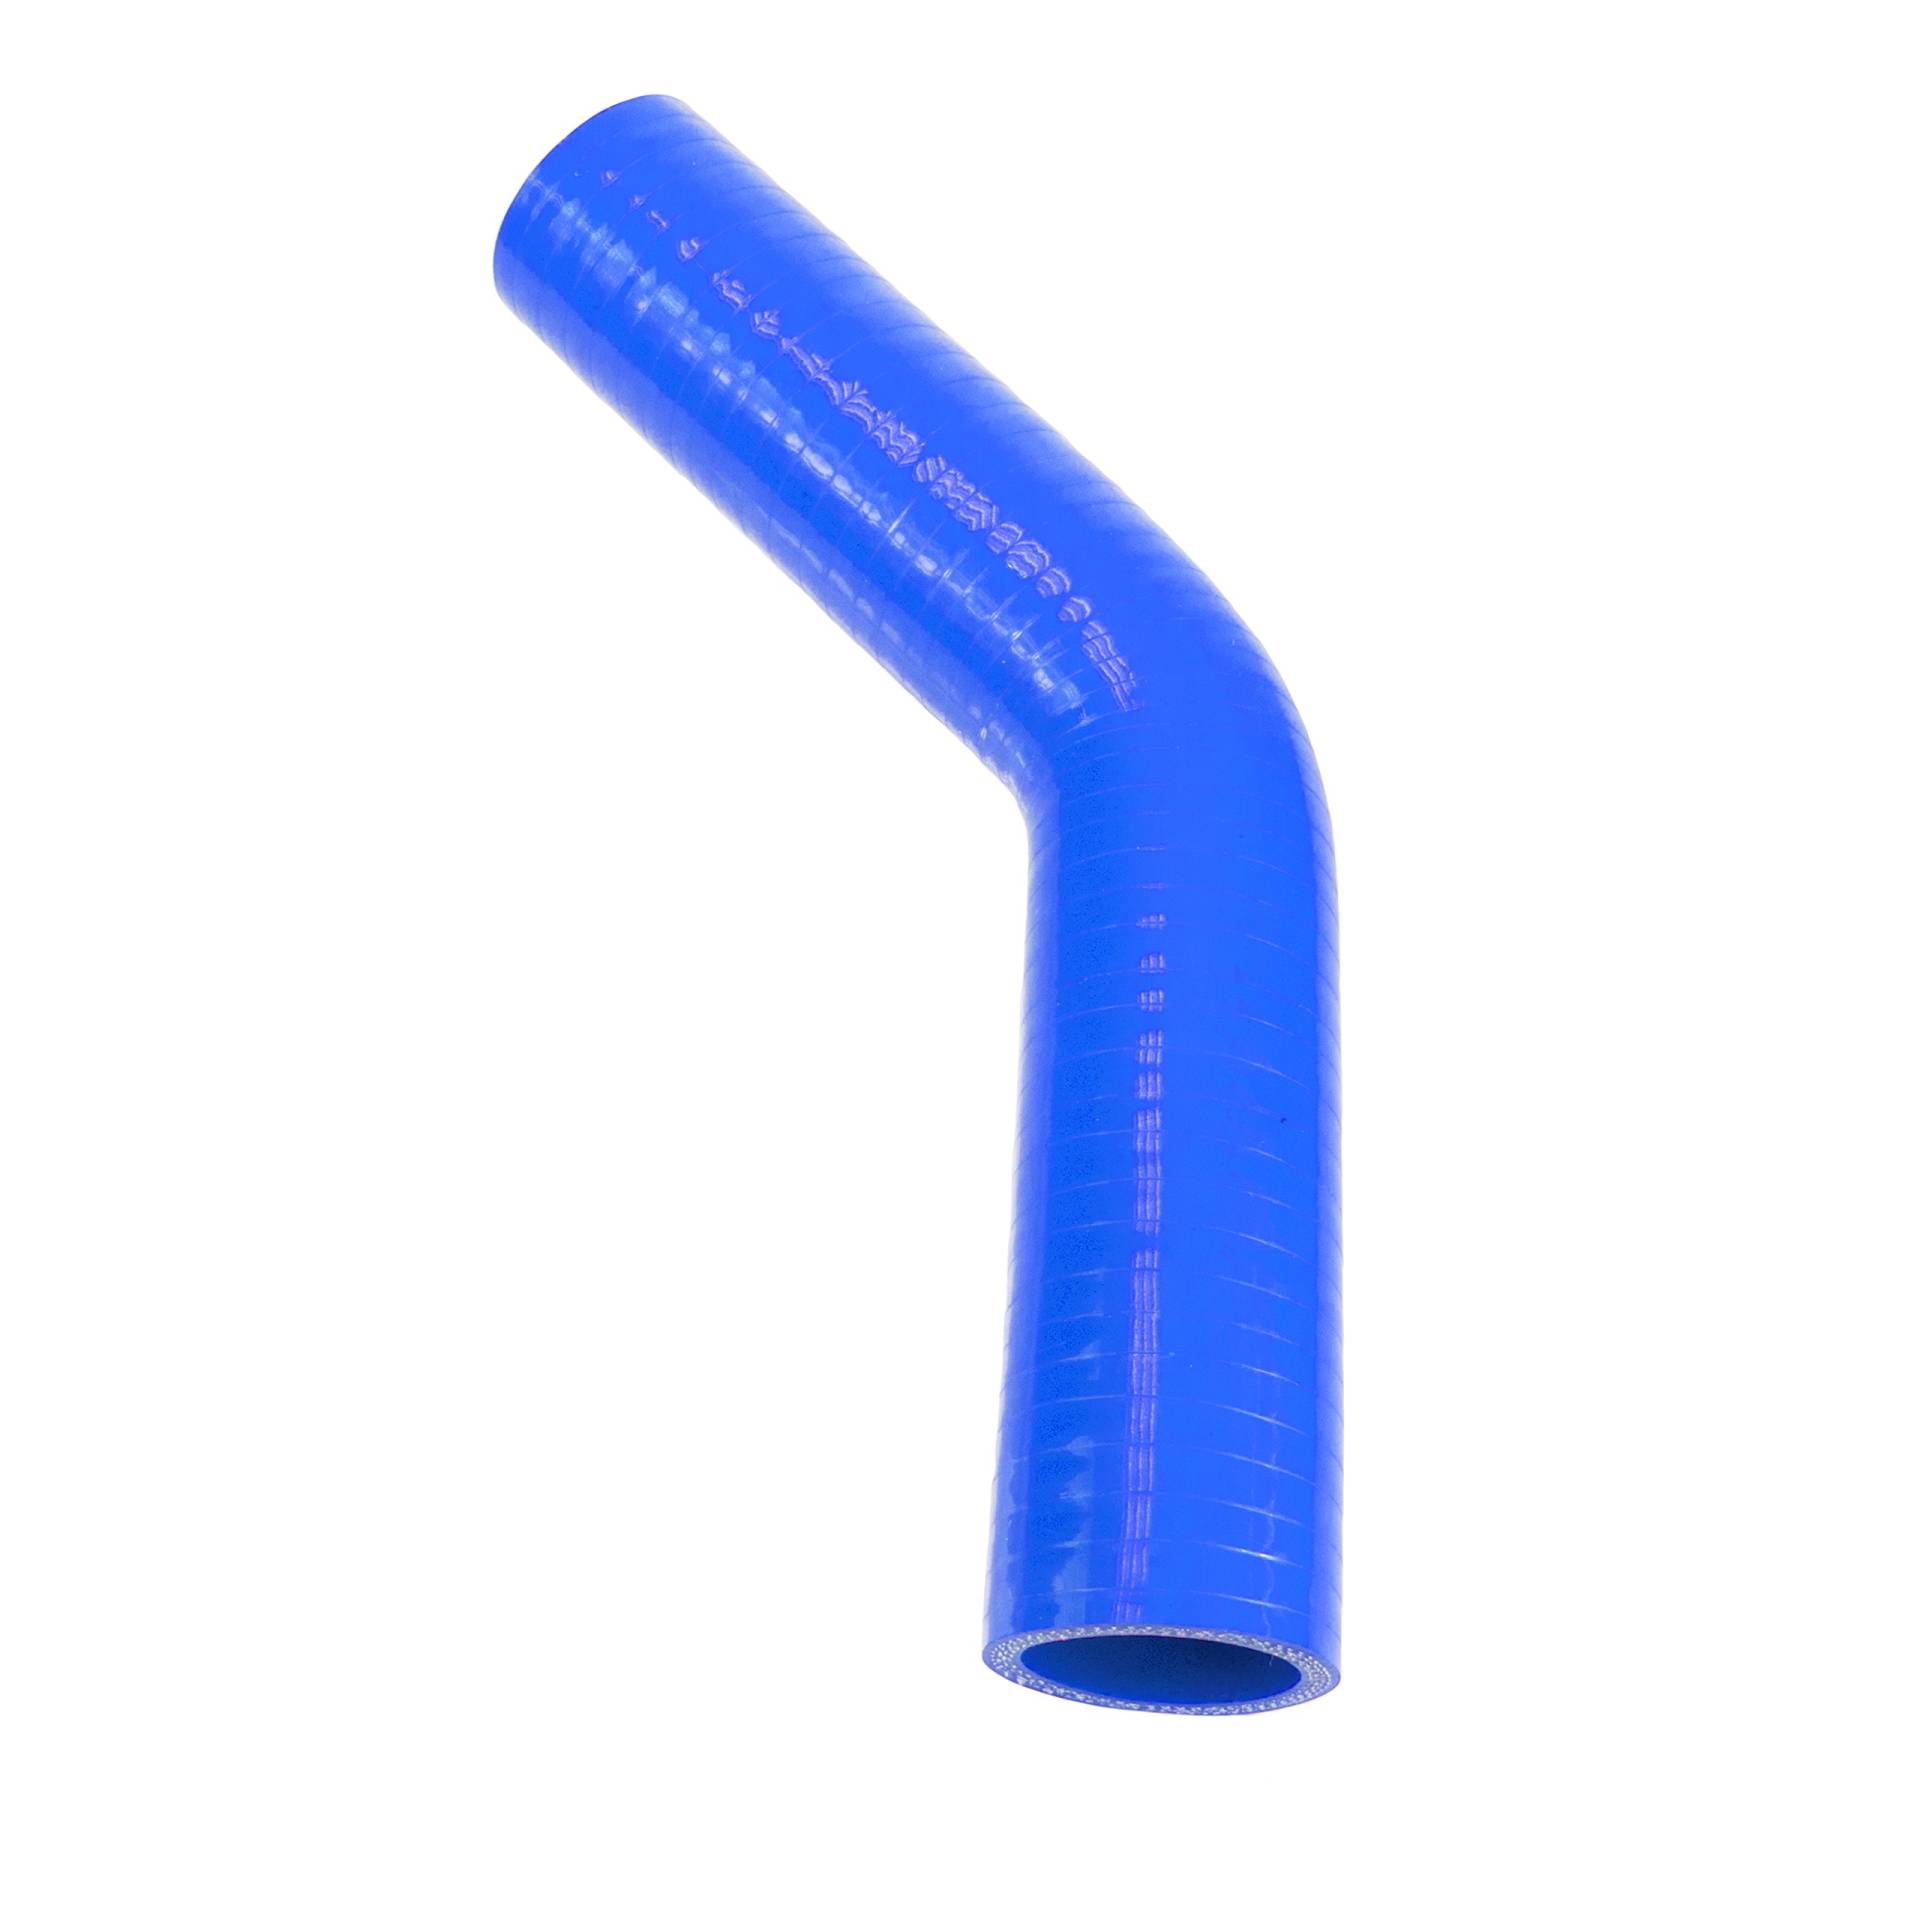 ramair Filter rse4530bl 4 lagig Hohe Qualität Silikon Ellenbogen, 45 Grad Bend, blau, 30 mm ID von Ramair Filters